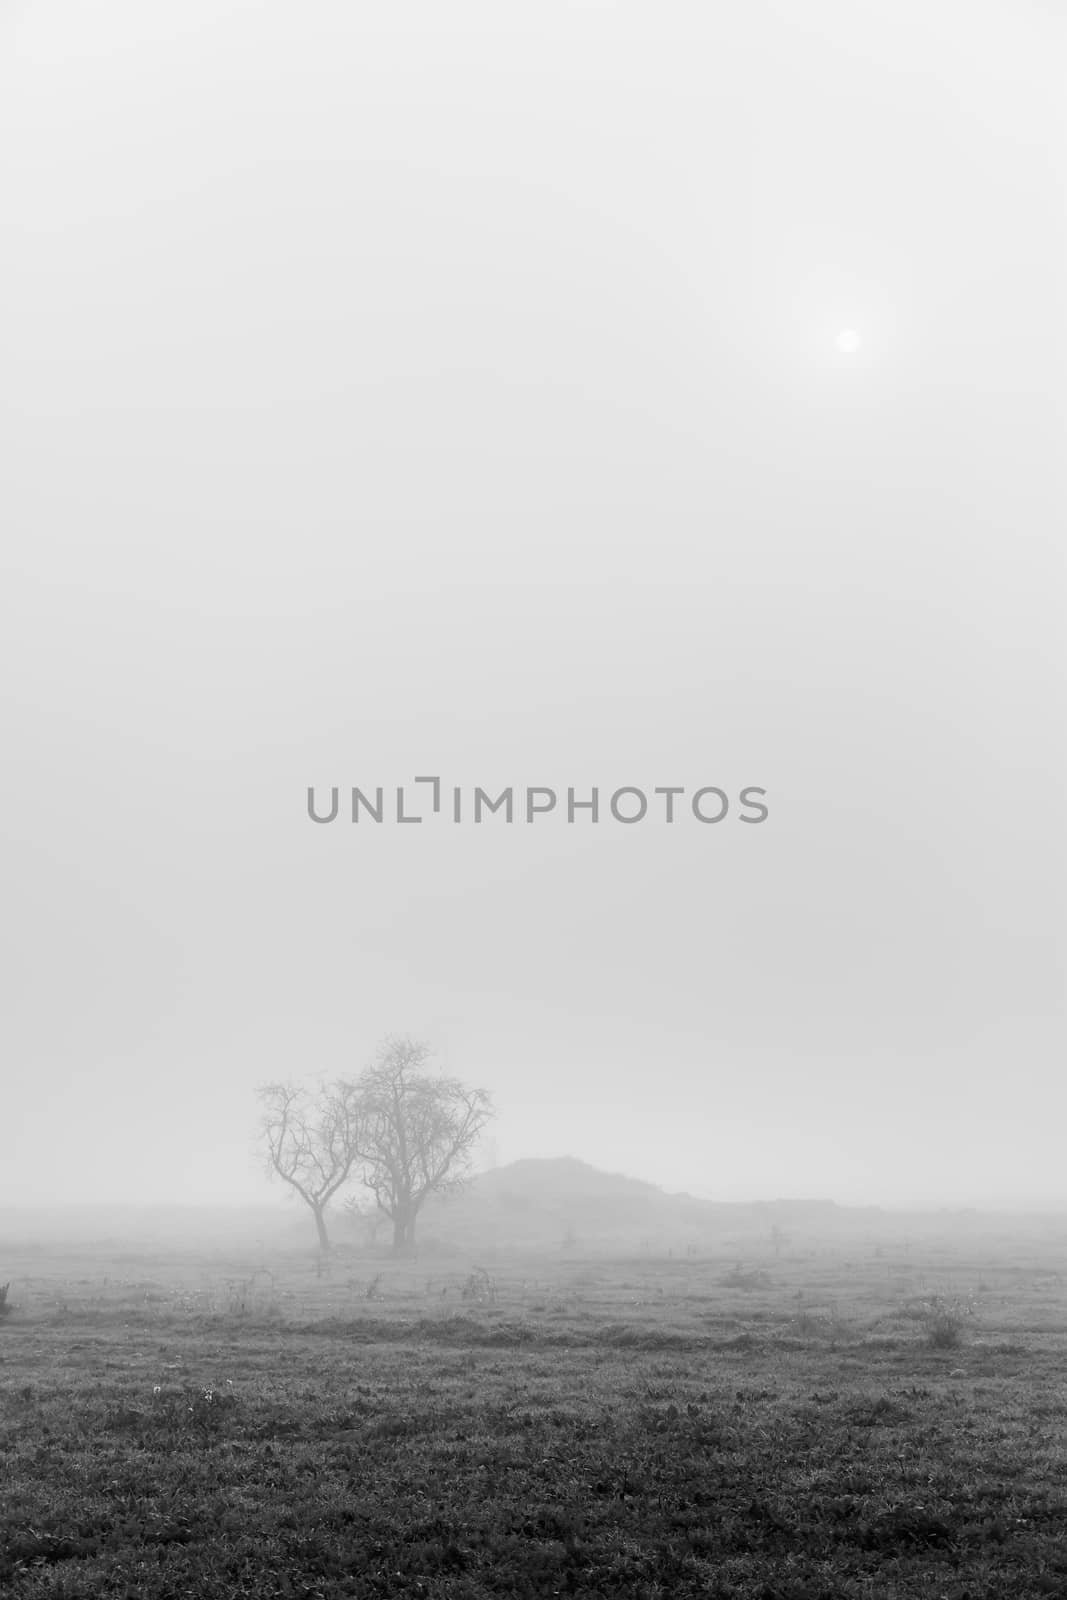 Dry tree in the mist by esebene